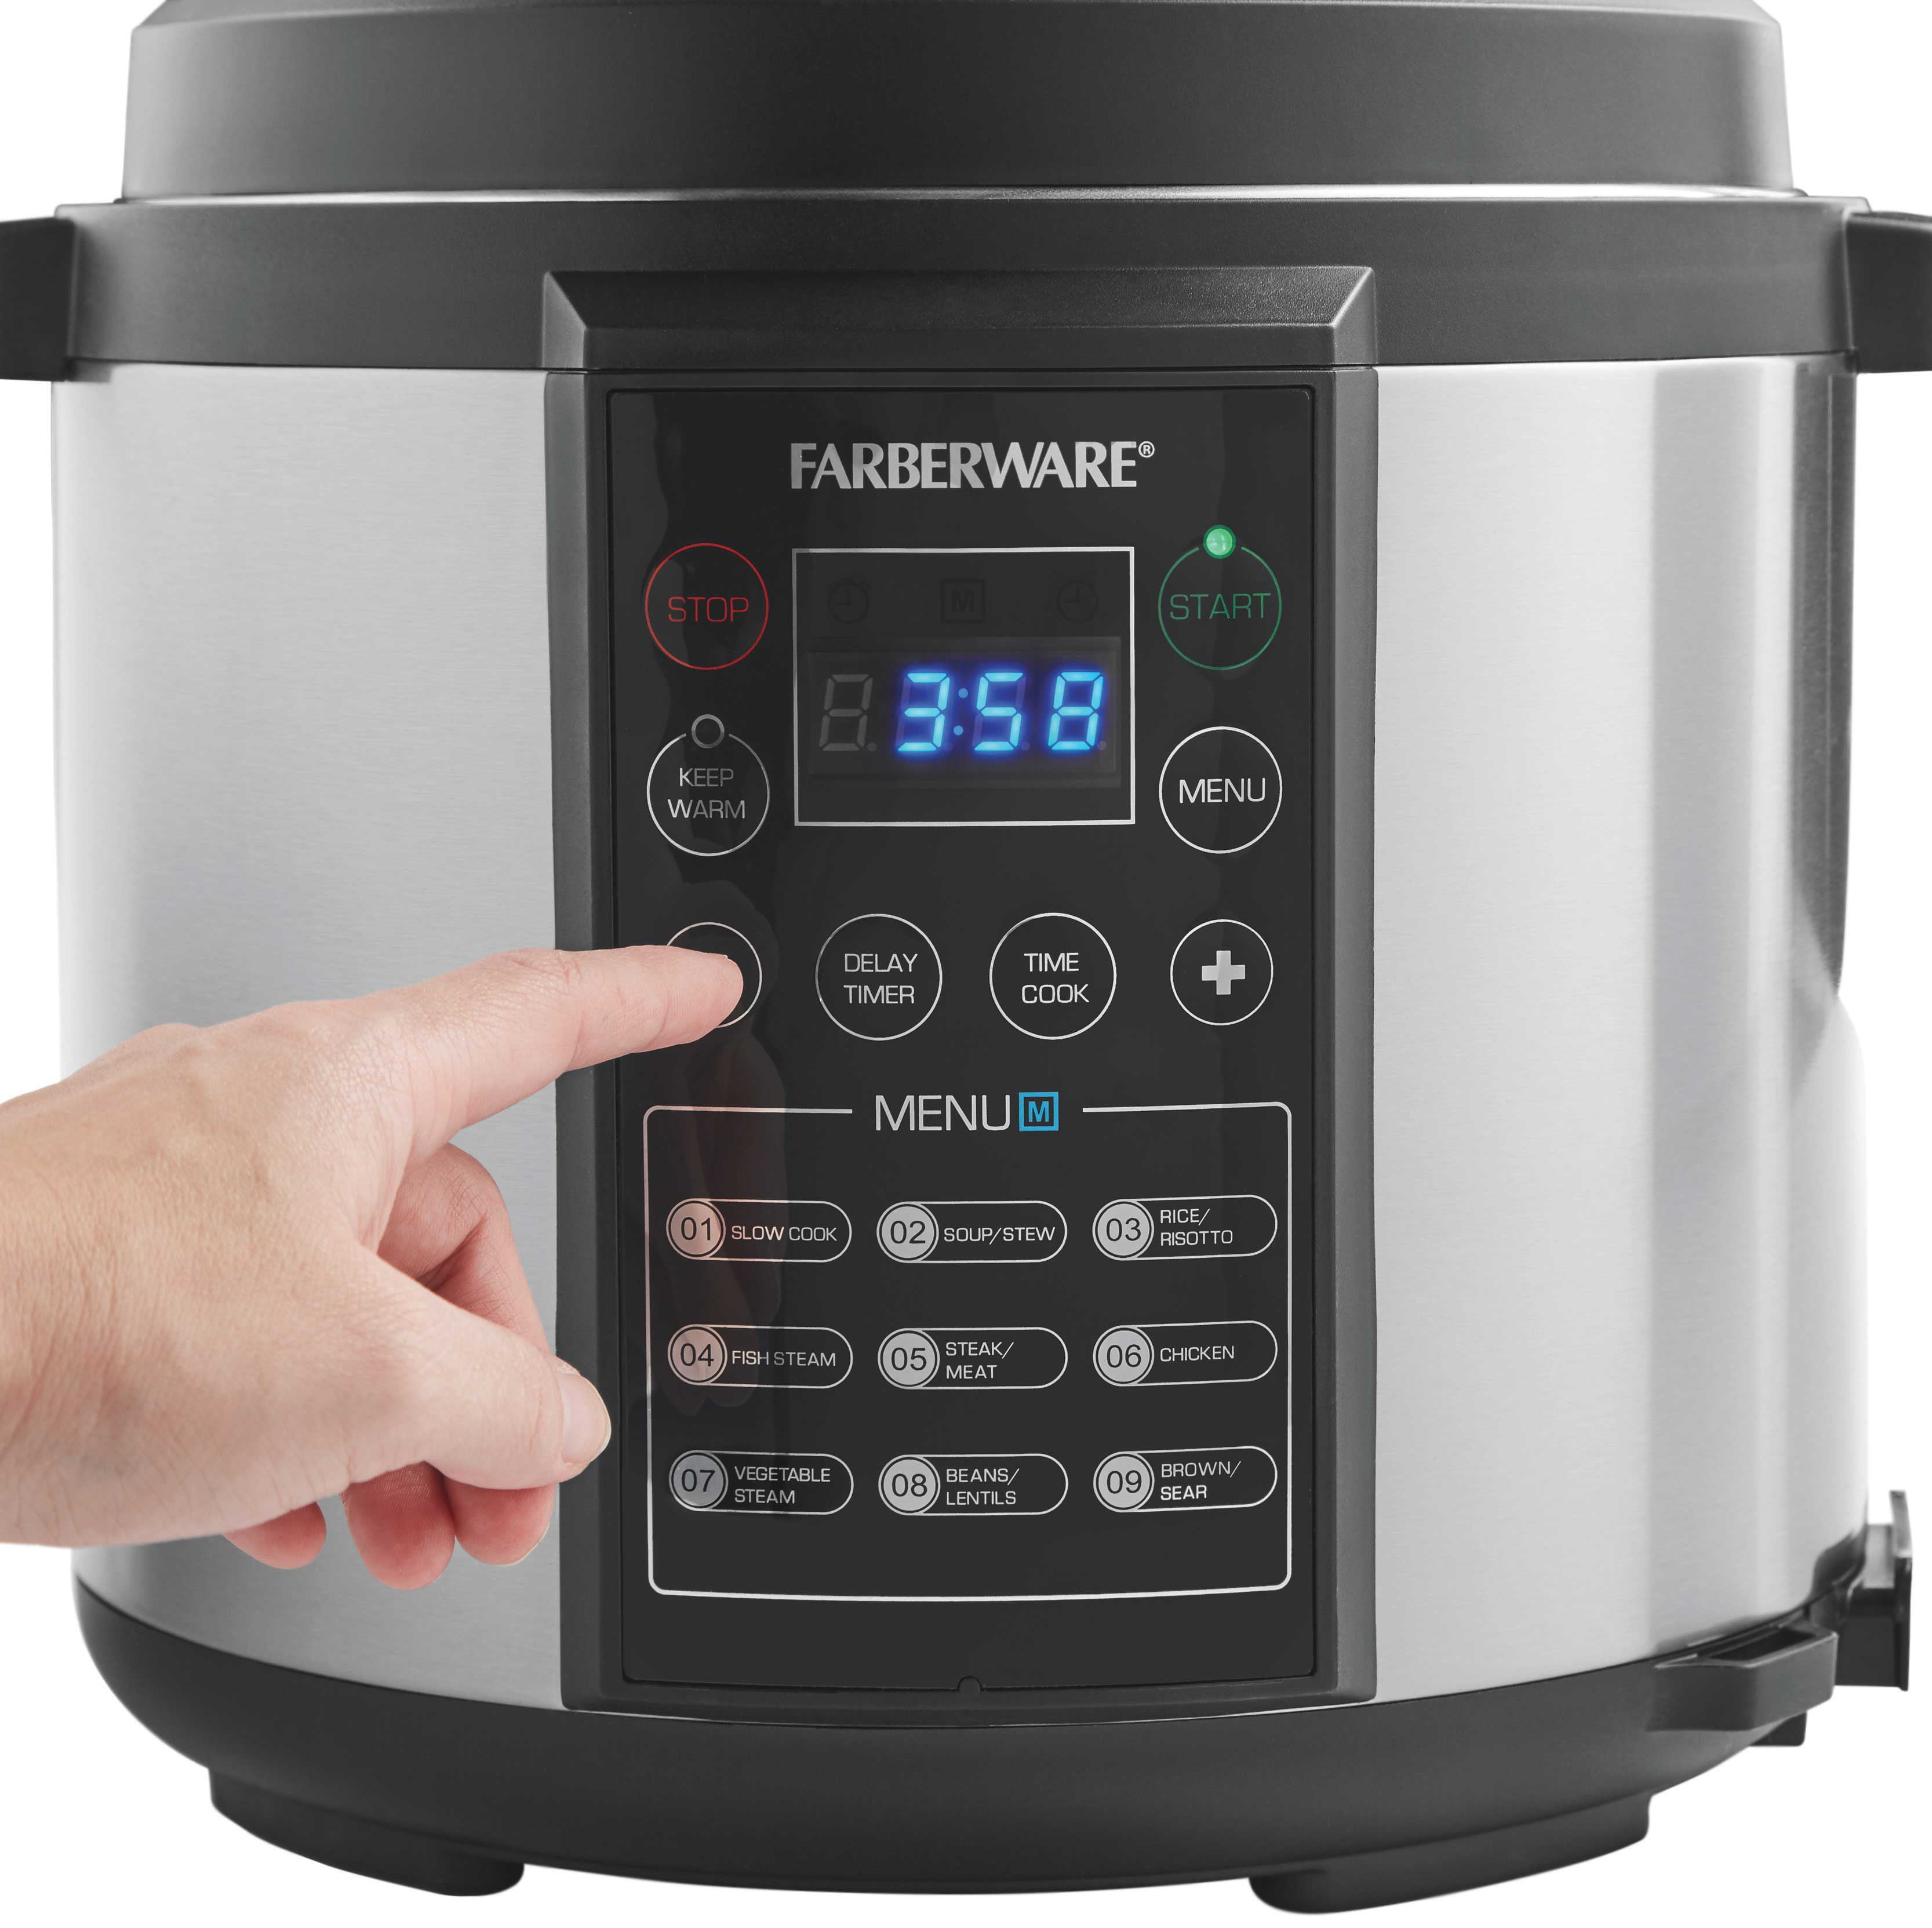 Farberware 6-Quart Digital Pressure Cooker Only $59.84 Shipped